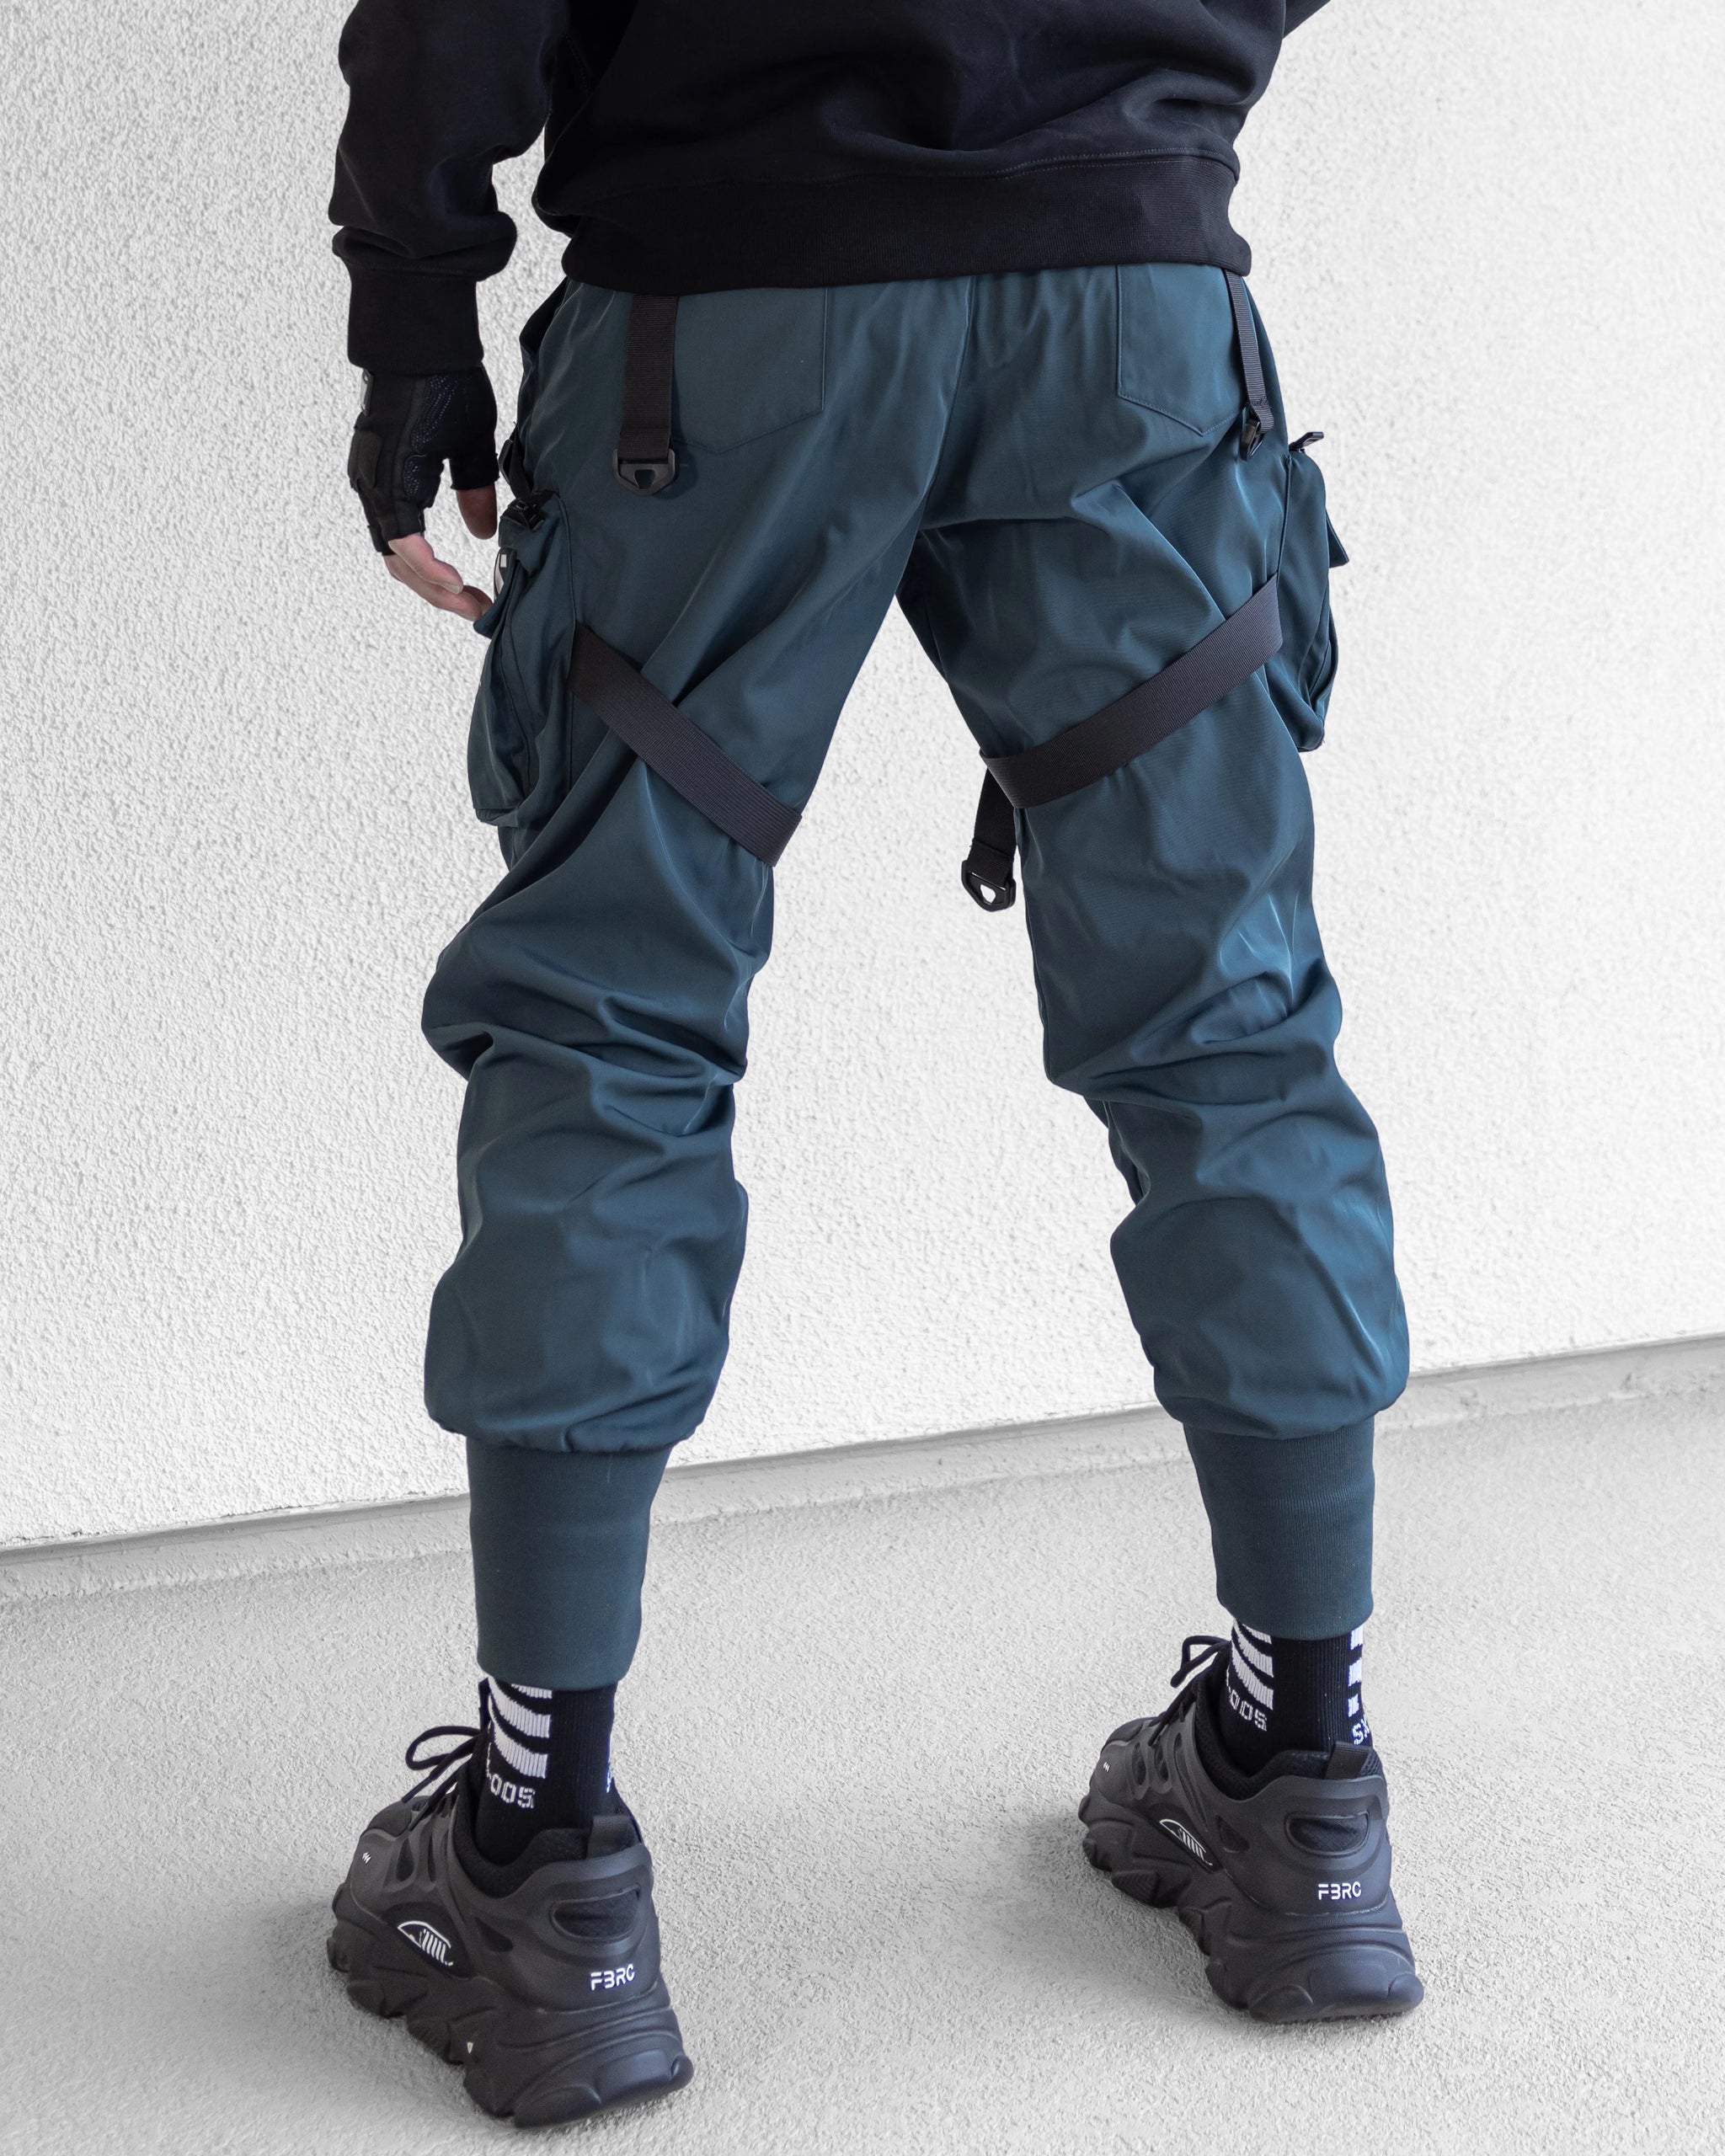 CG-Type 10F Black Cargo Pants - Fabric of the Universe